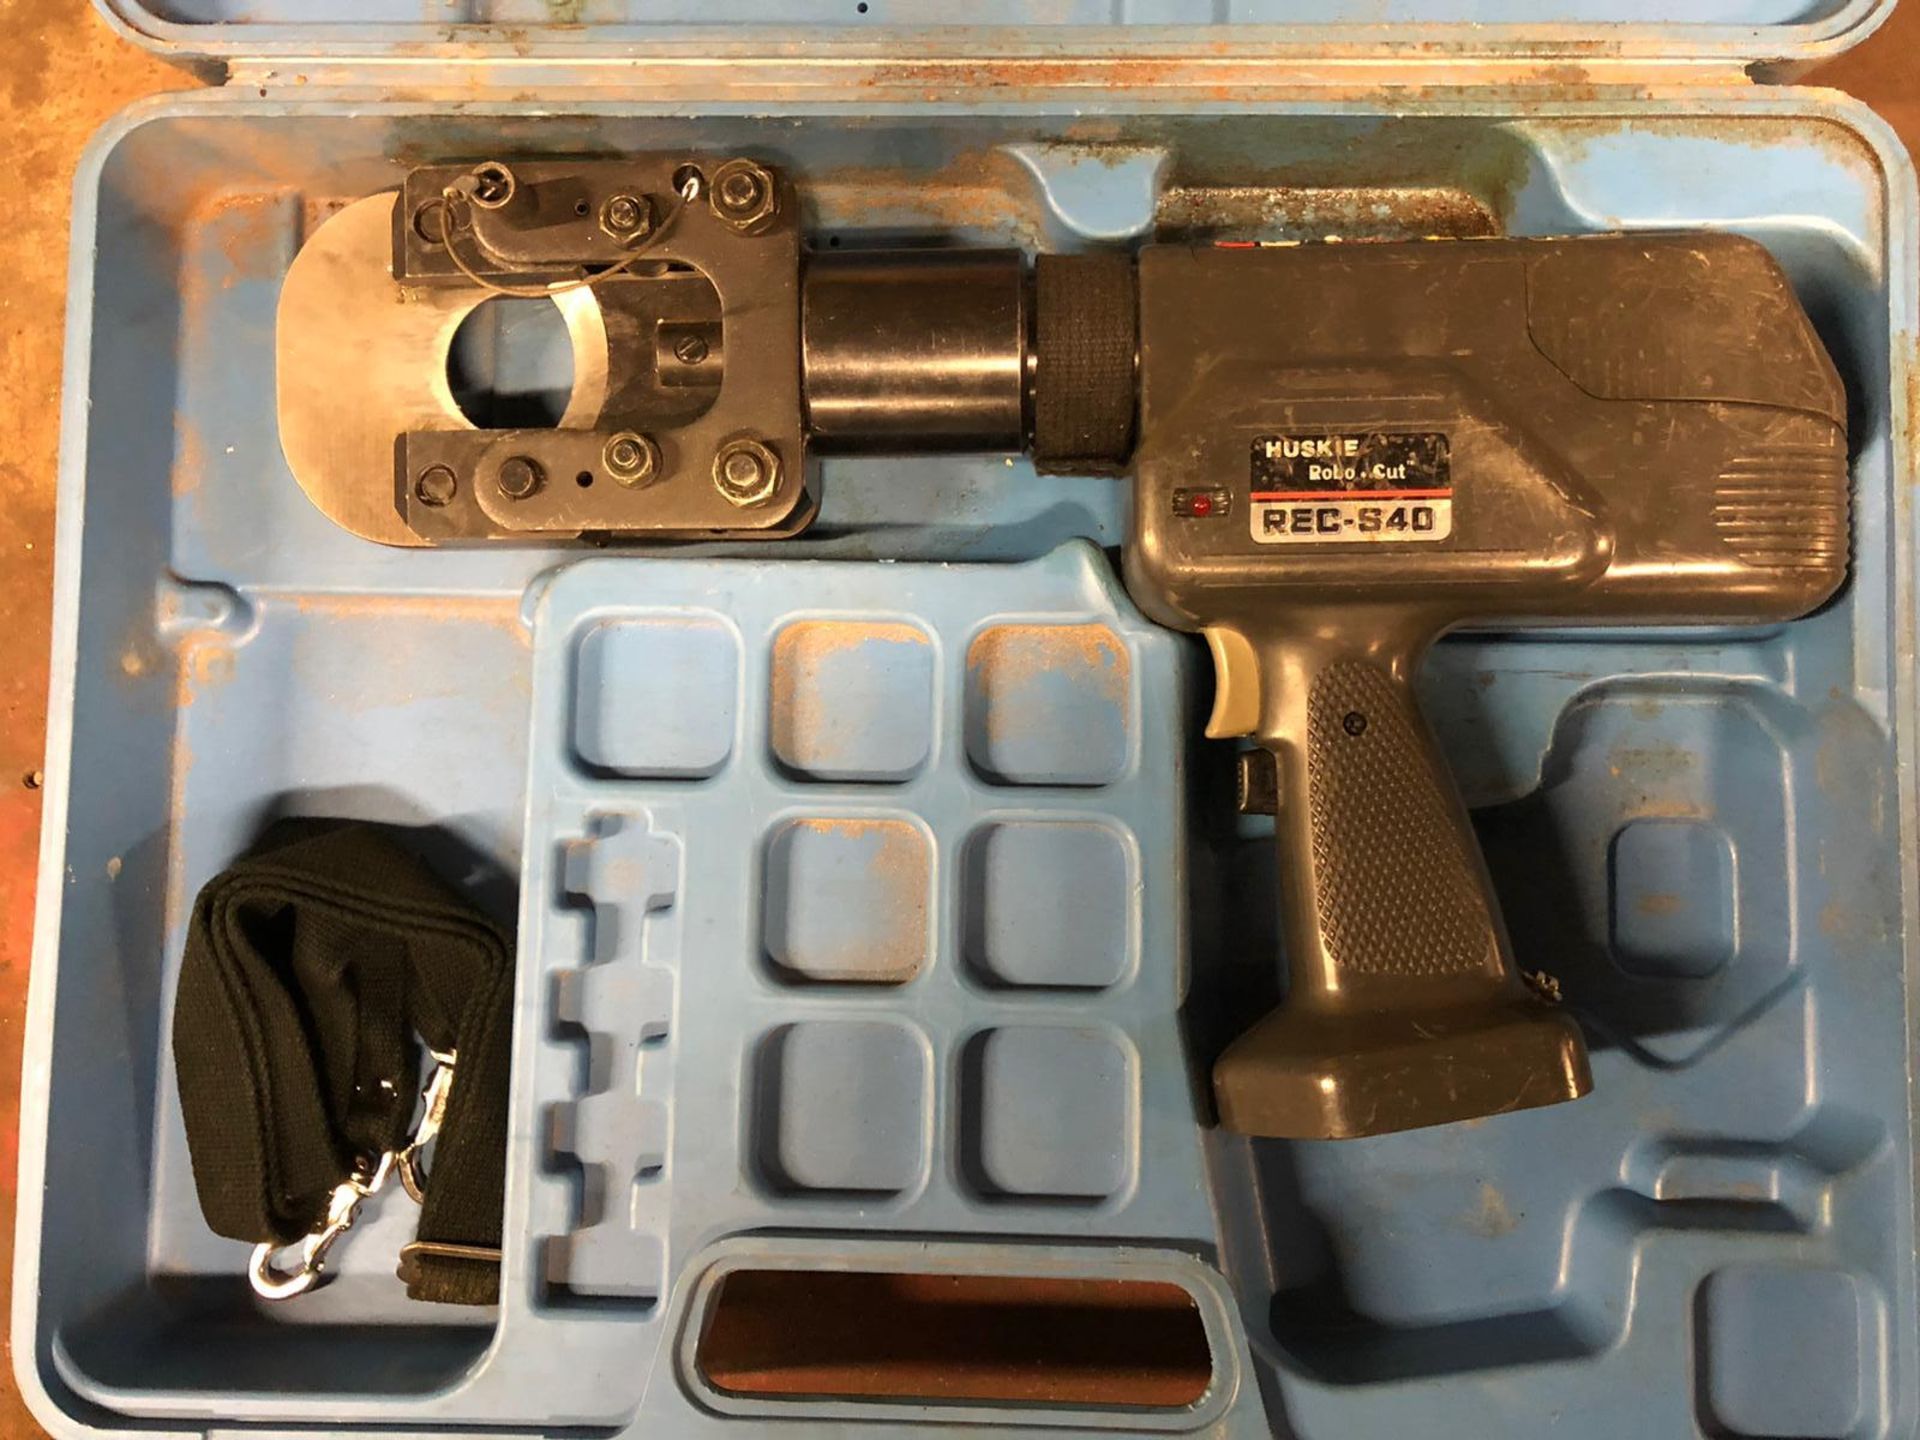 Huskie Rolo-Cut model REC-S40 Handheld Cutter Tool in case